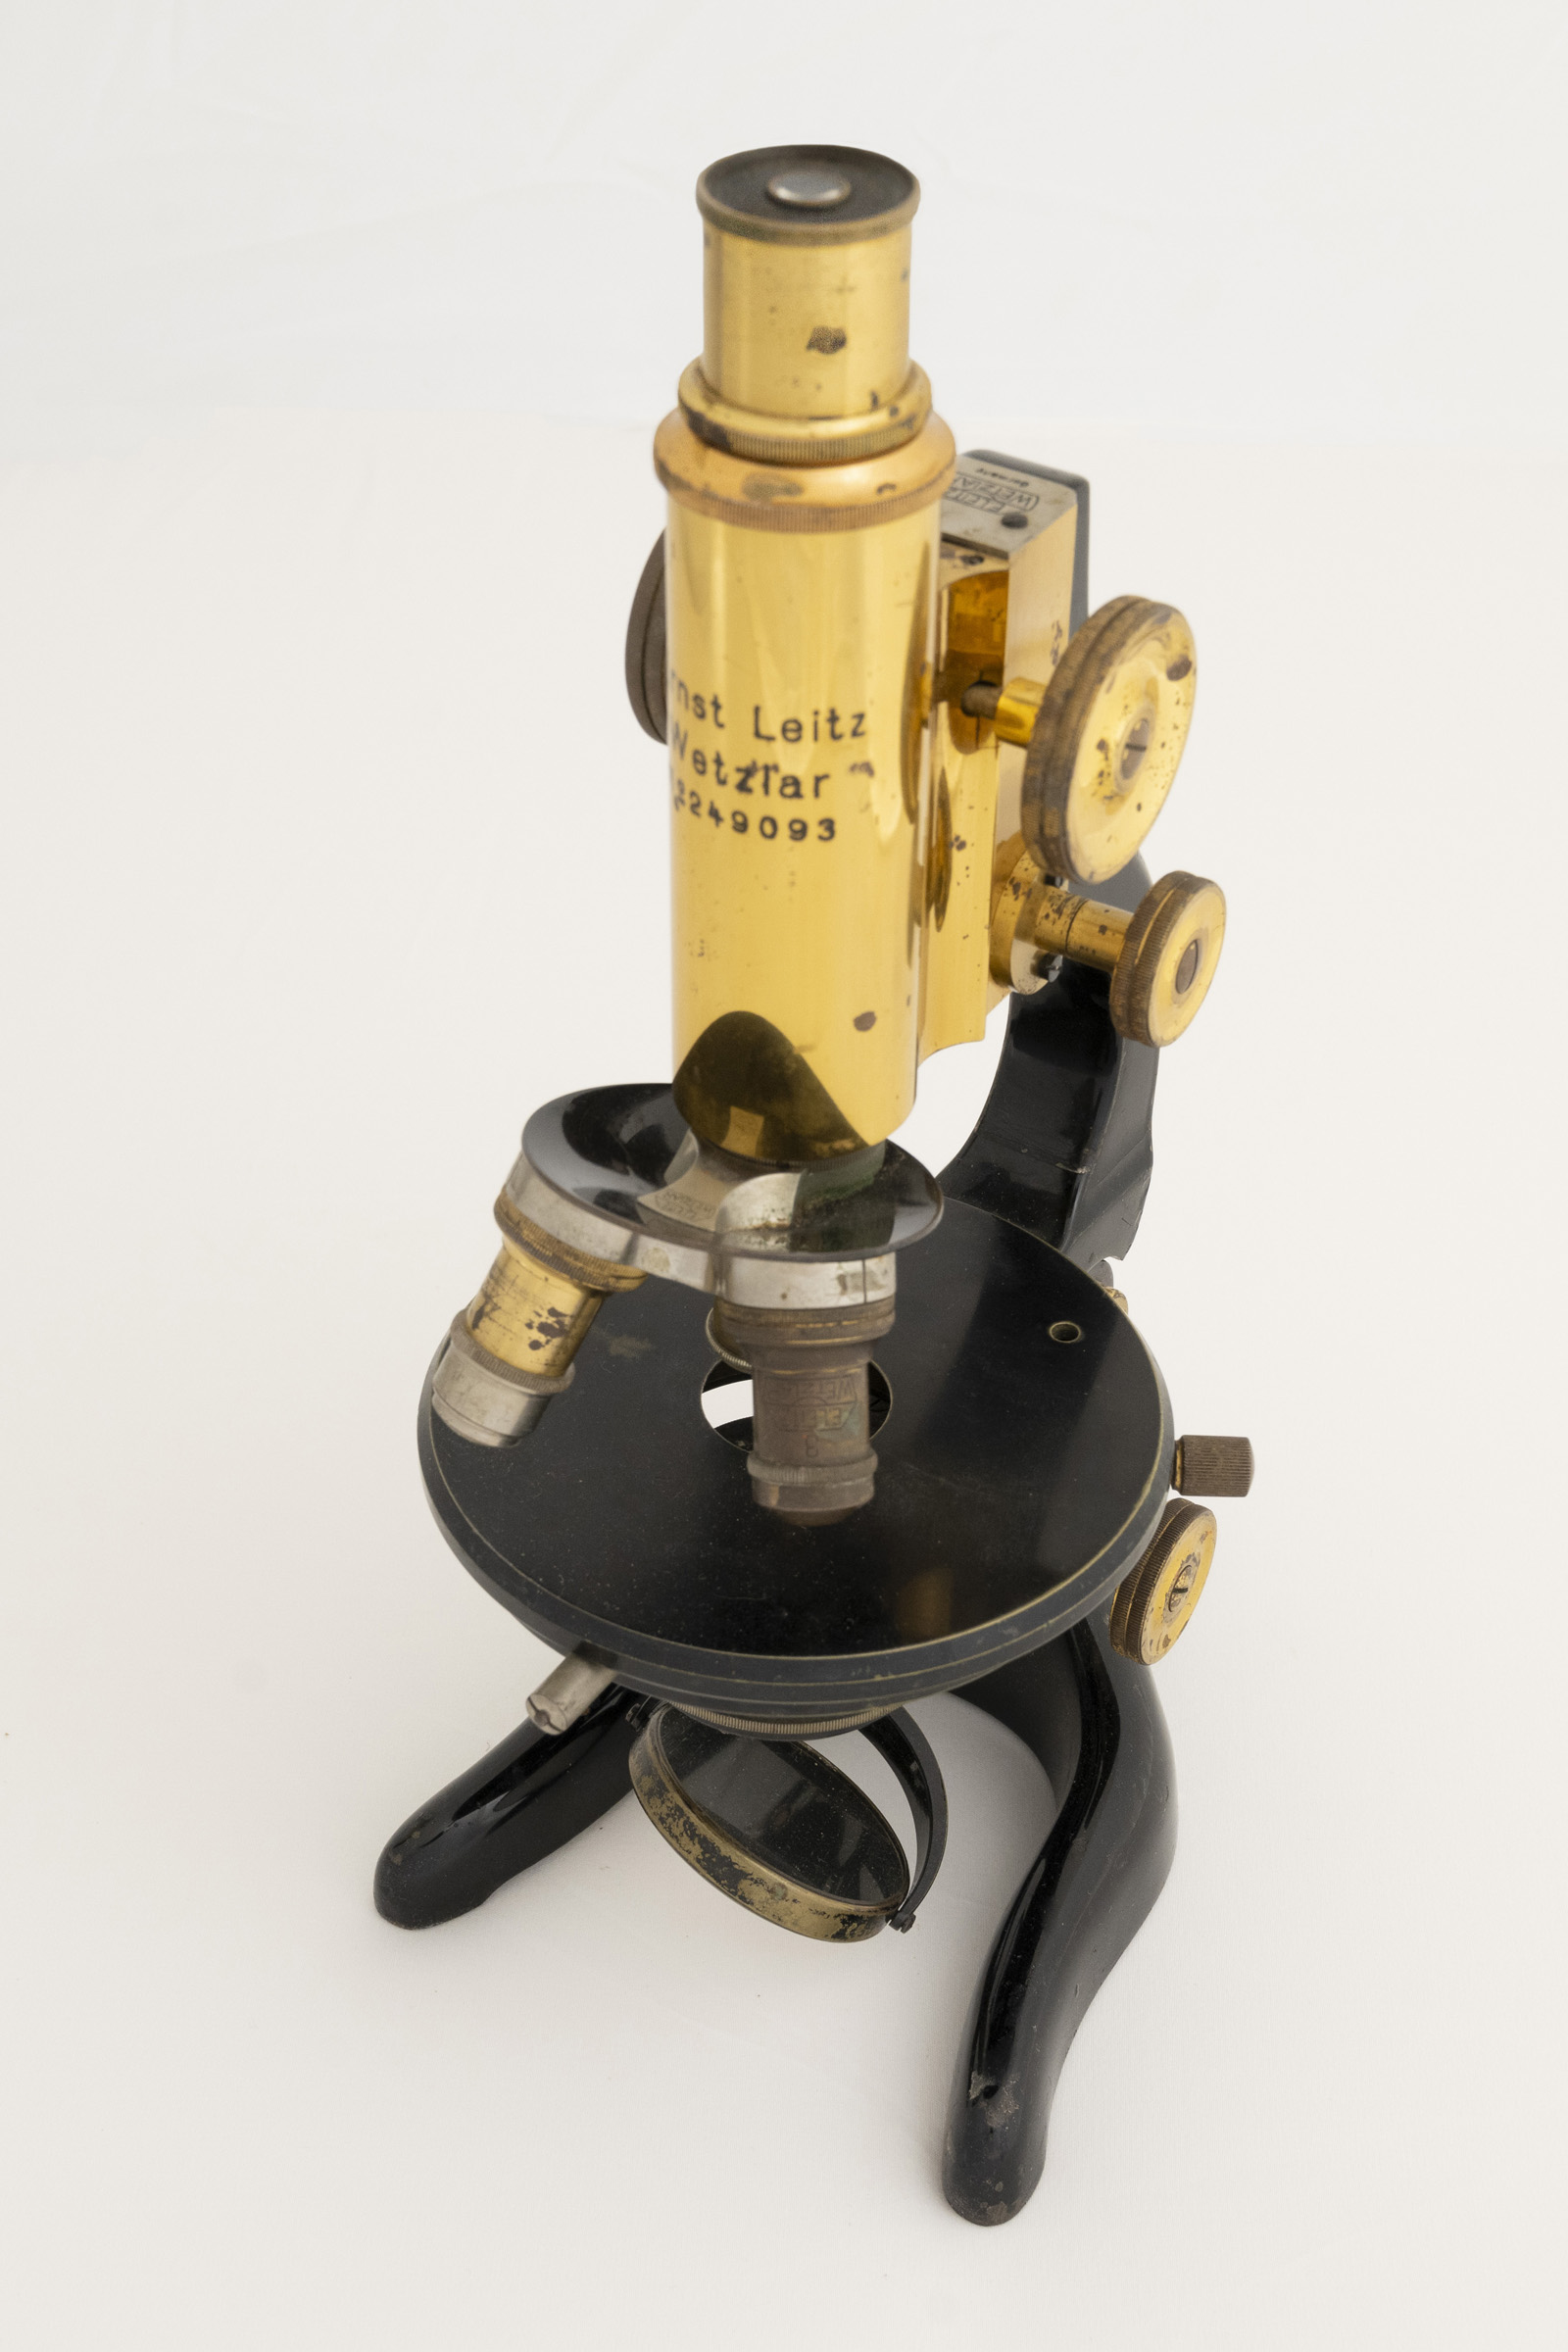 Brass and black miscroscope